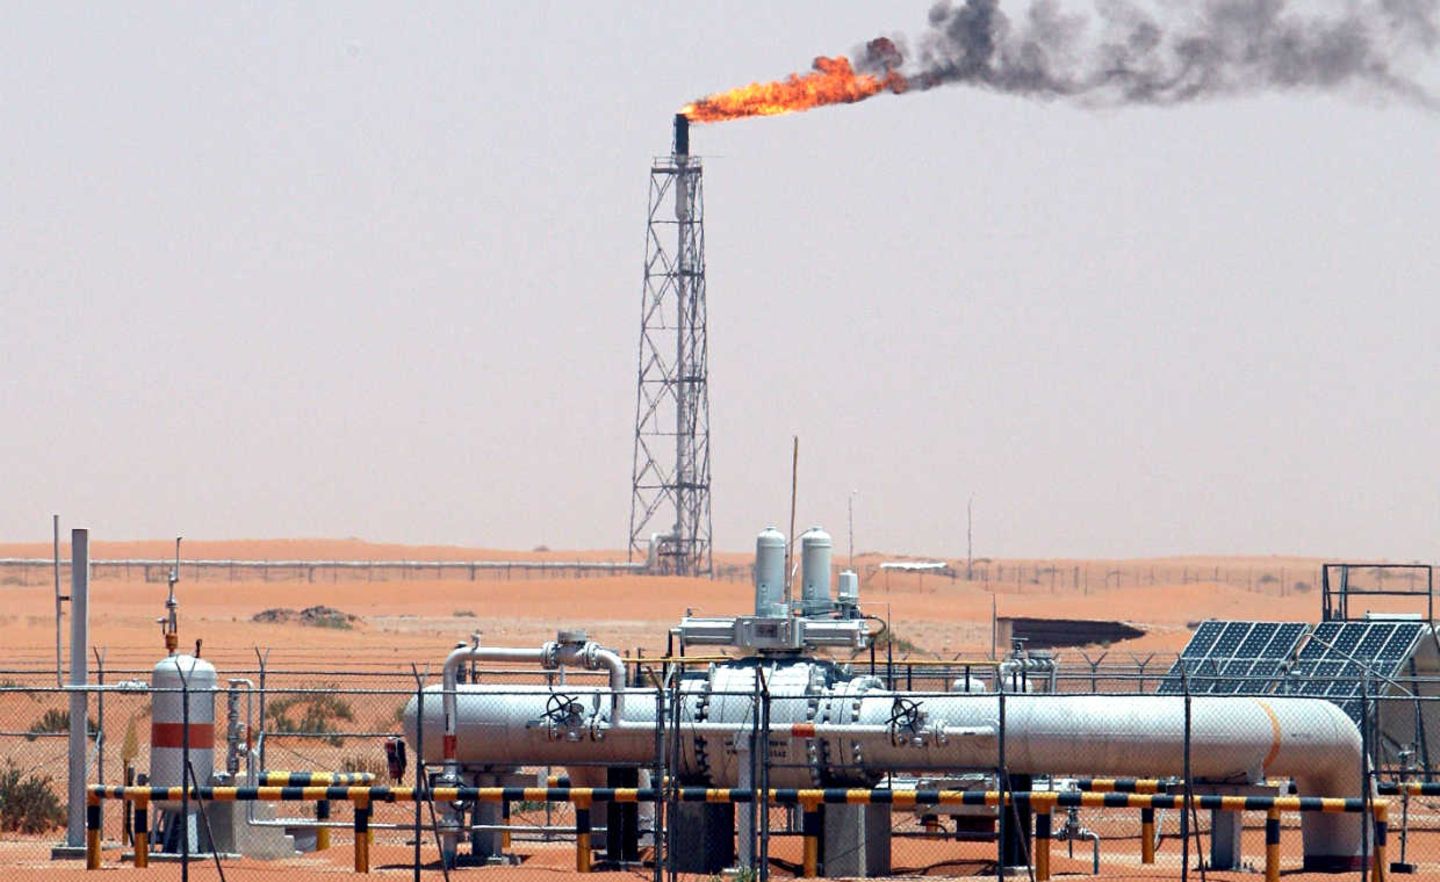 Ölförderung in Saudi-Arabien